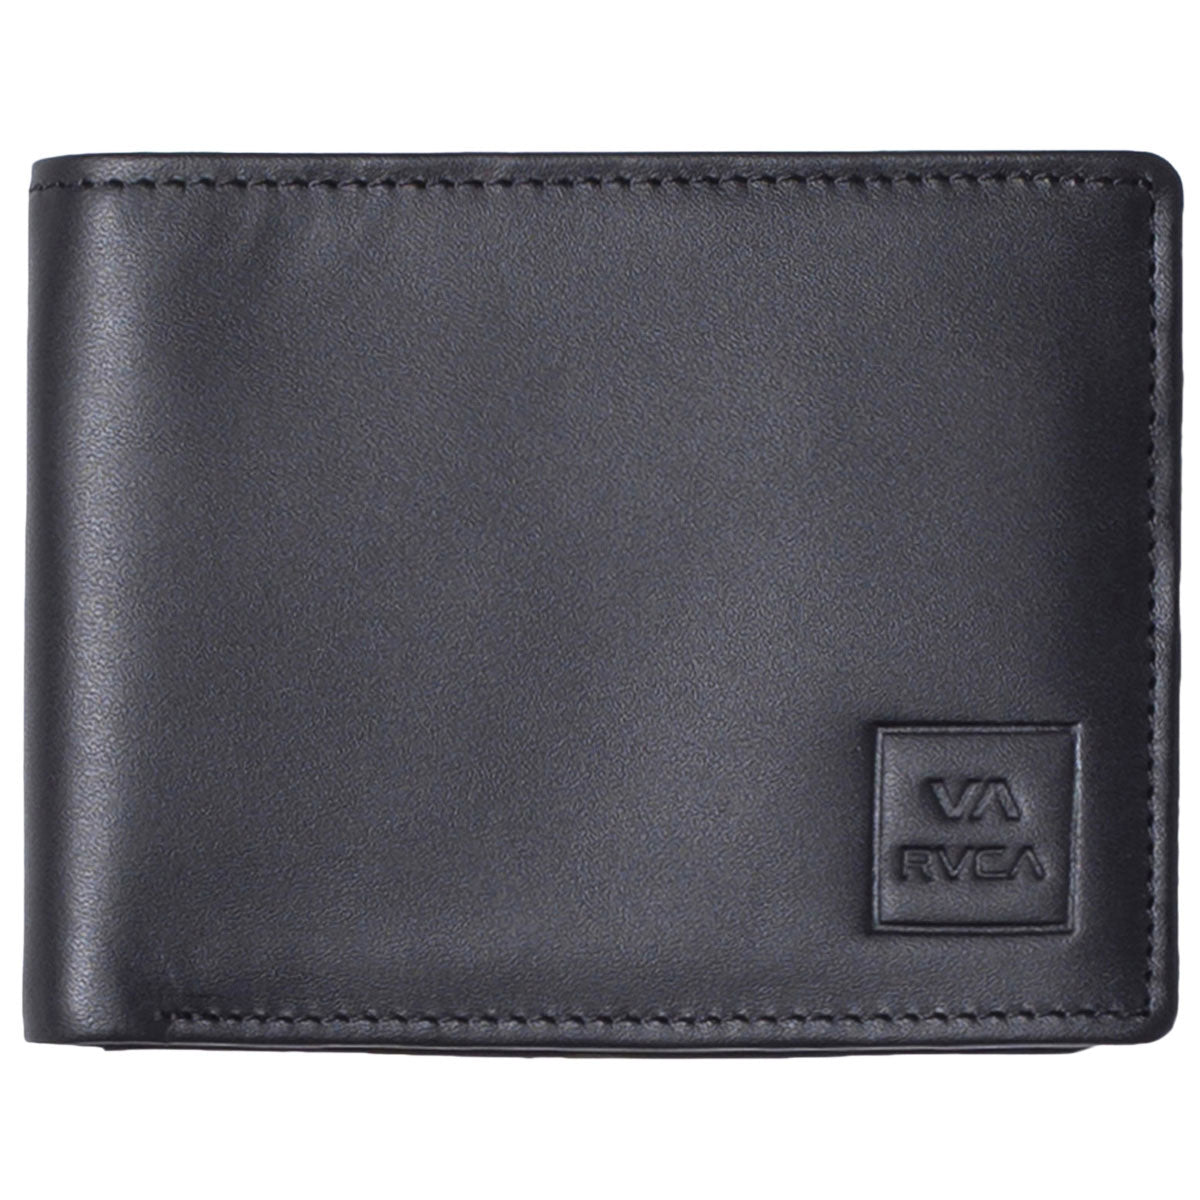 RVCA Cedar Bifold Wallet - Black image 1